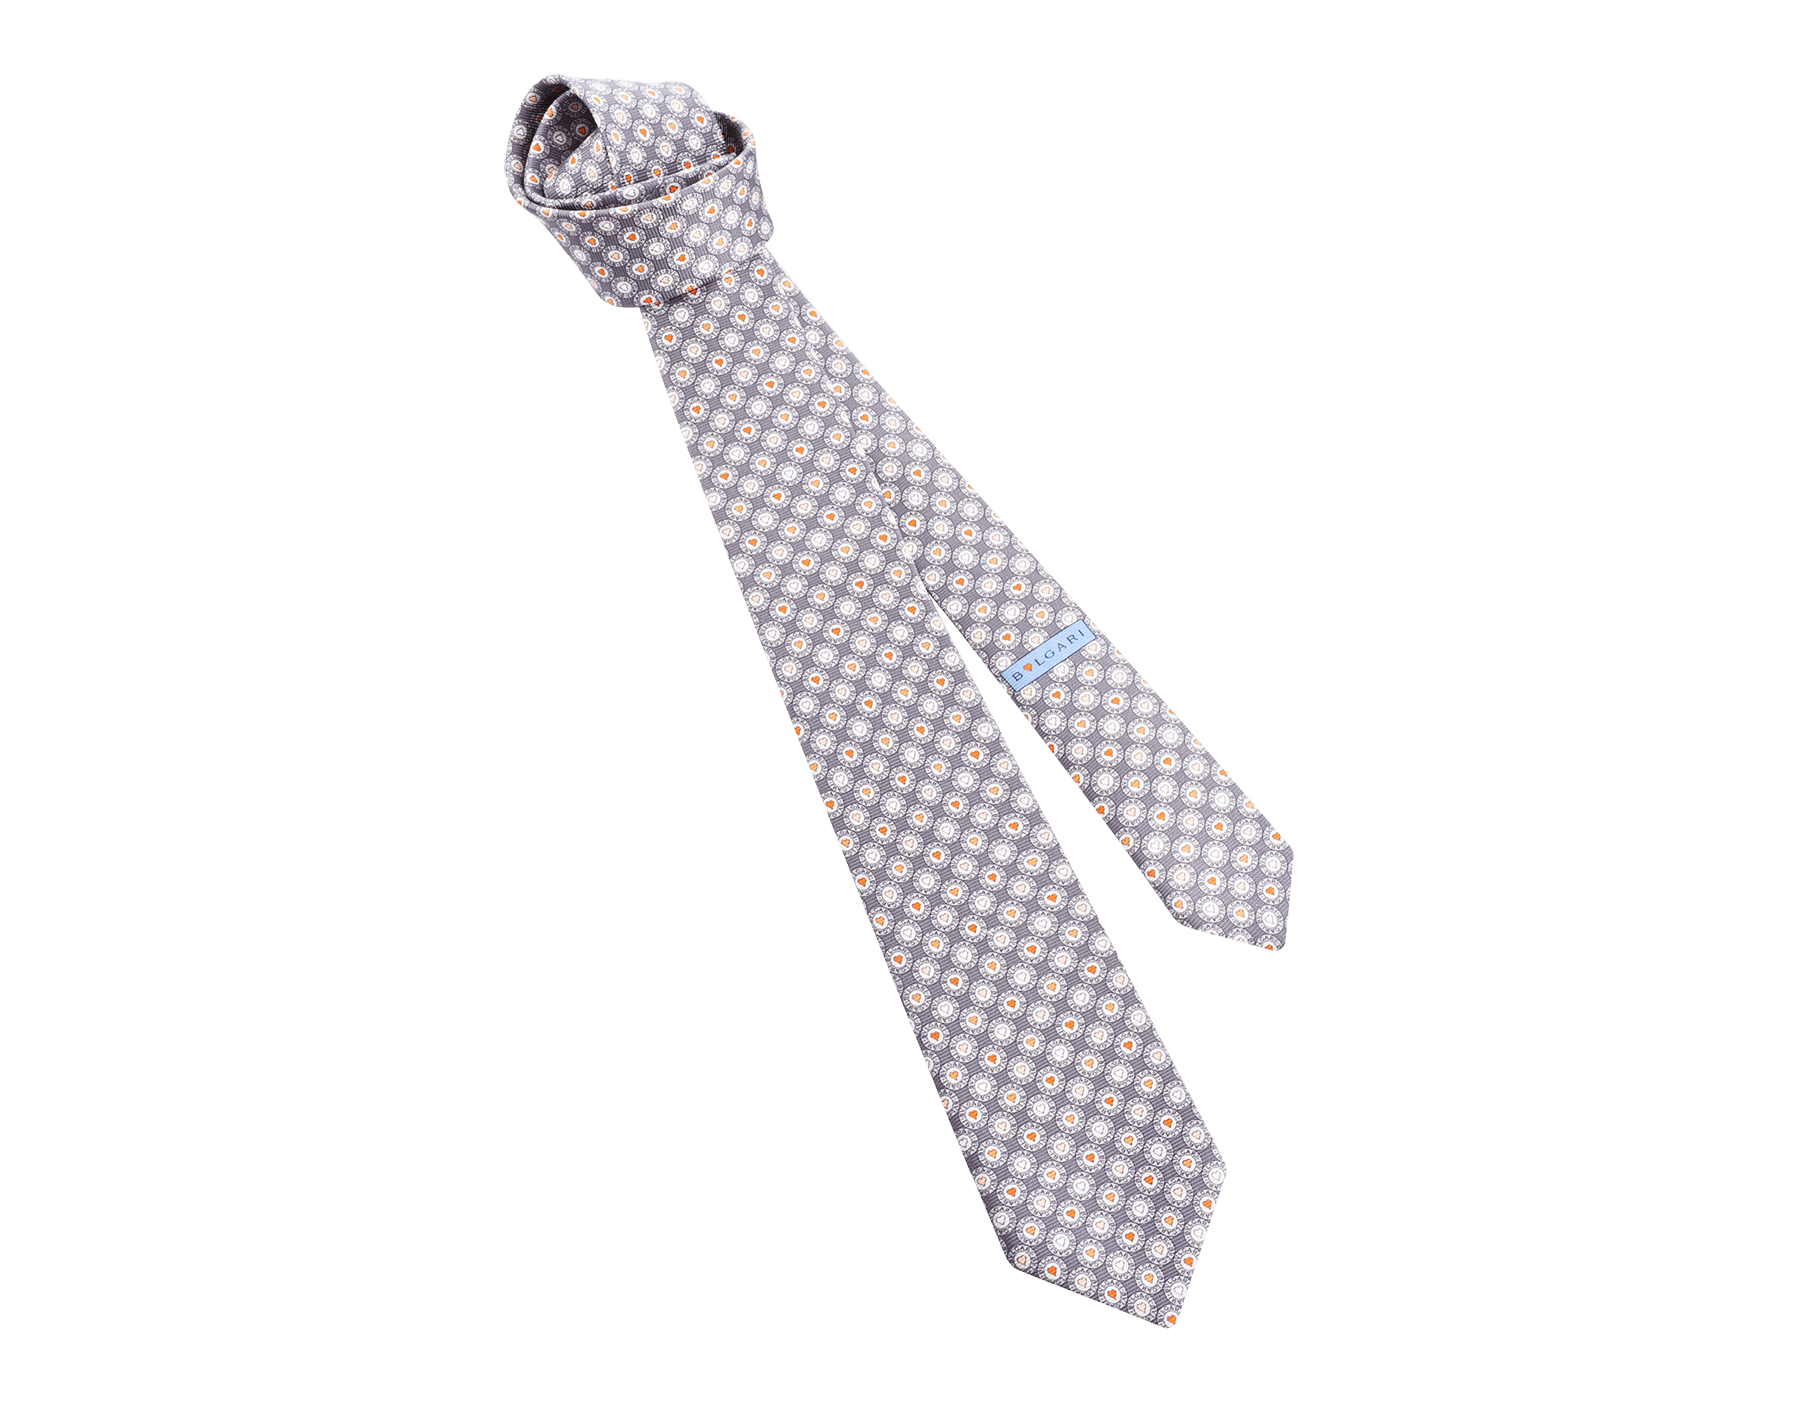 bvlgari necktie